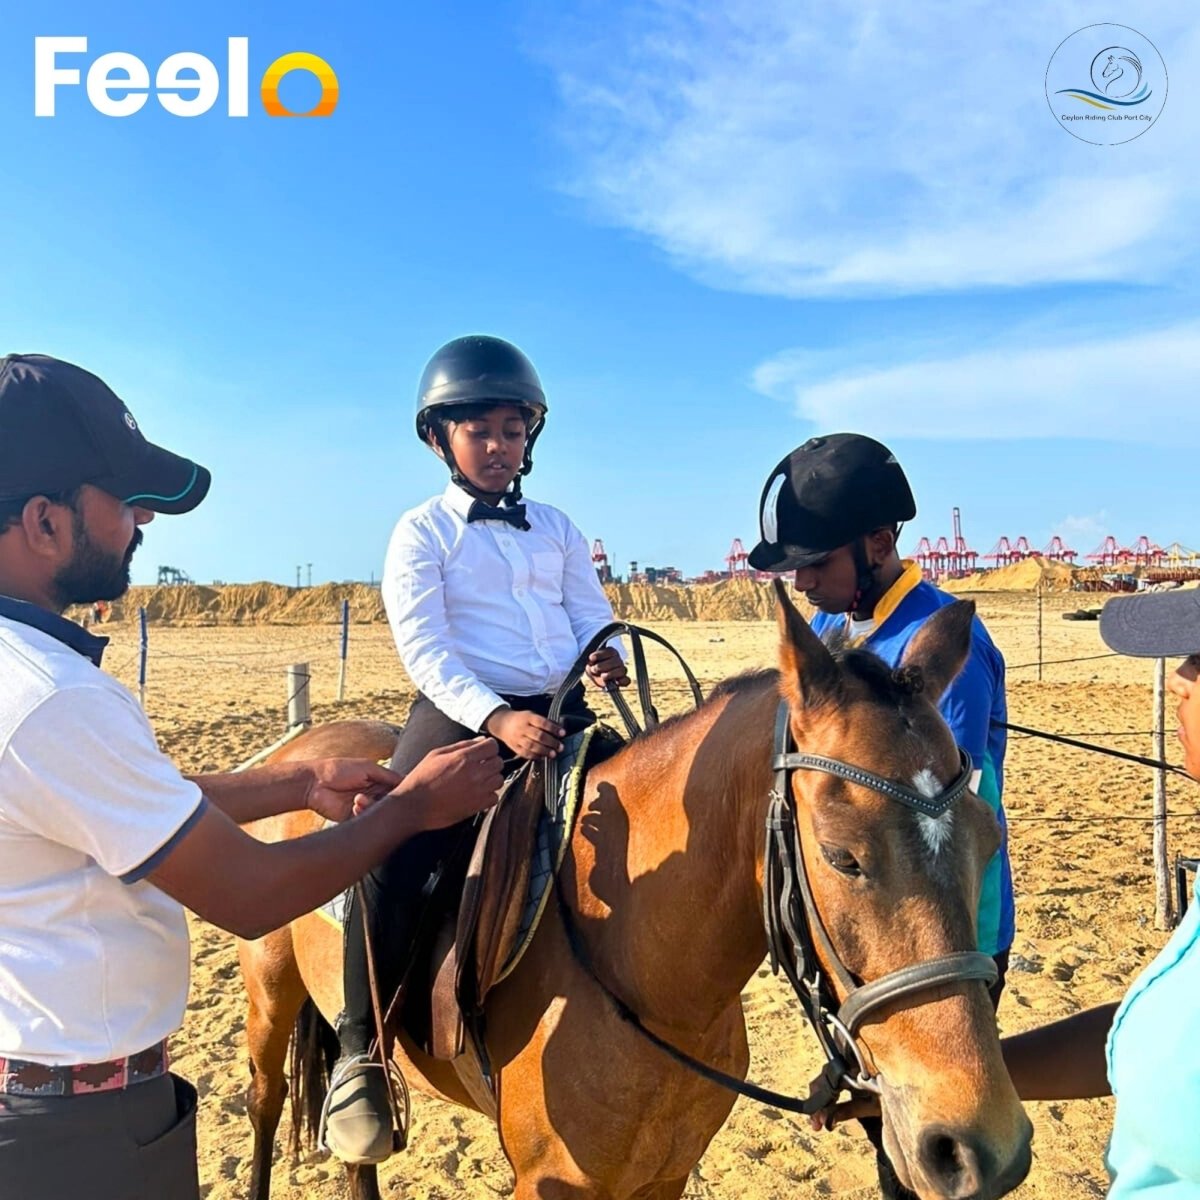 30min Horse Riding & Learning Basic Horse Controls in Port City, Colombo - Ceylon Riding Club-Port city, Colombo | Feelo